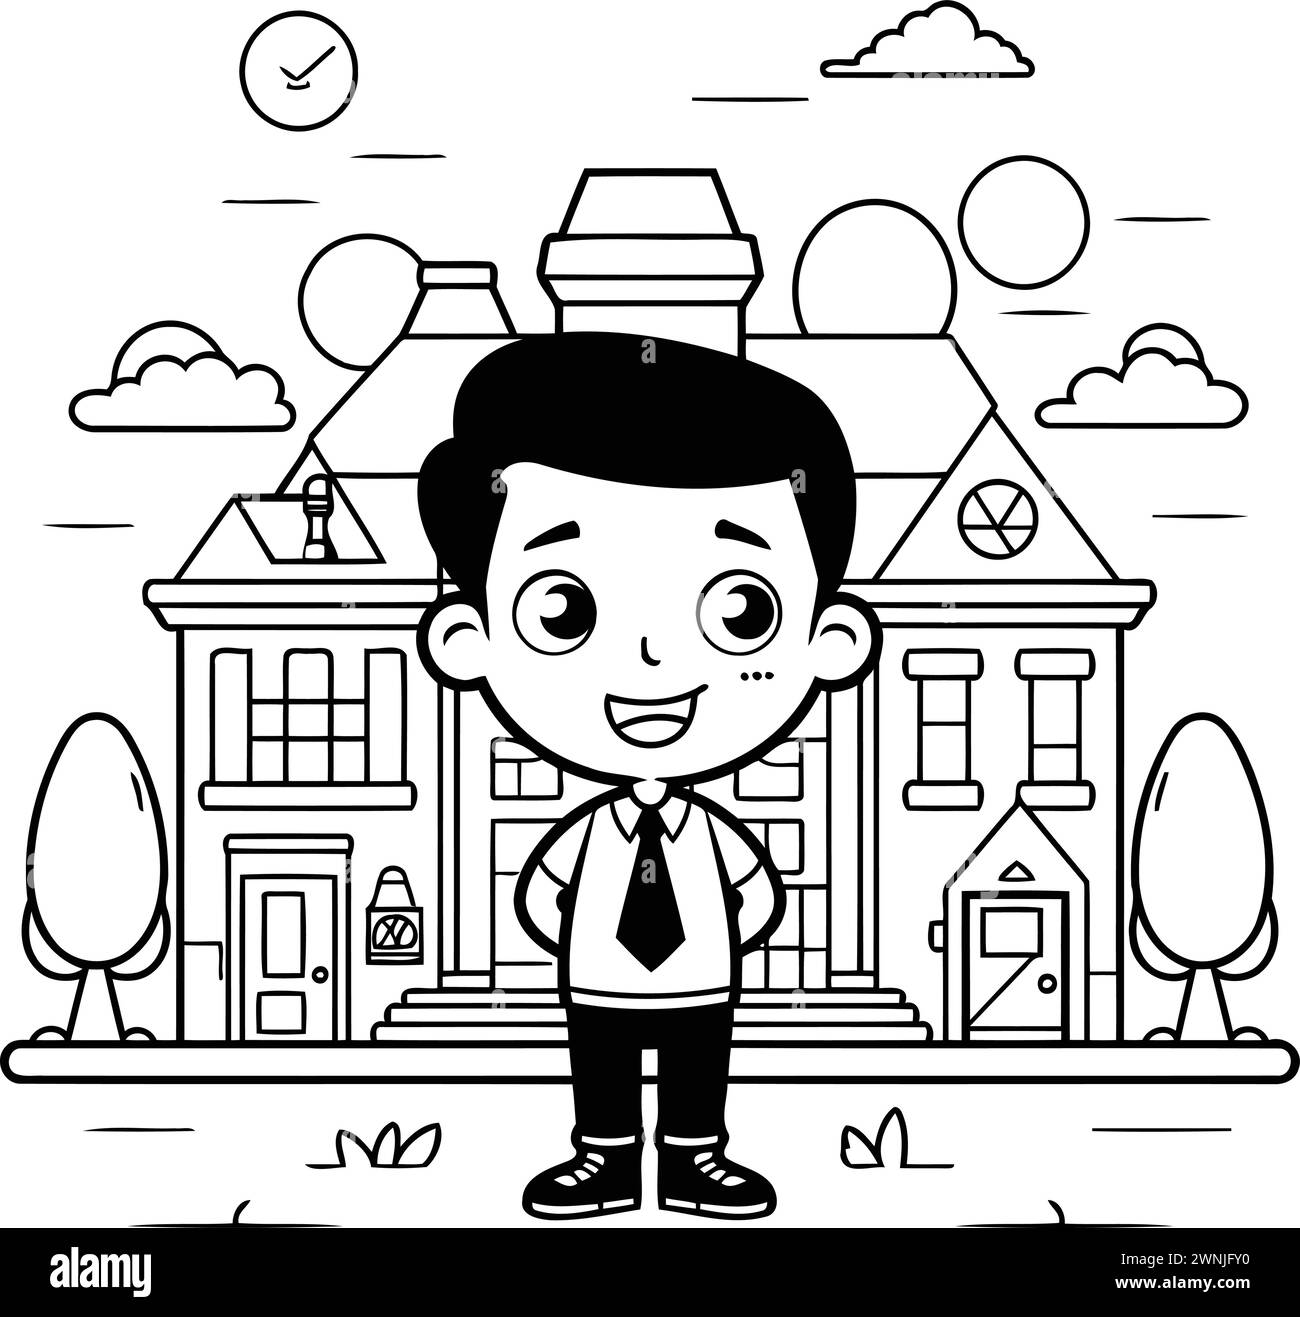 Businessman cartoon design. Man business management corporate job occupation and worker theme Vector illustration Stock Vector